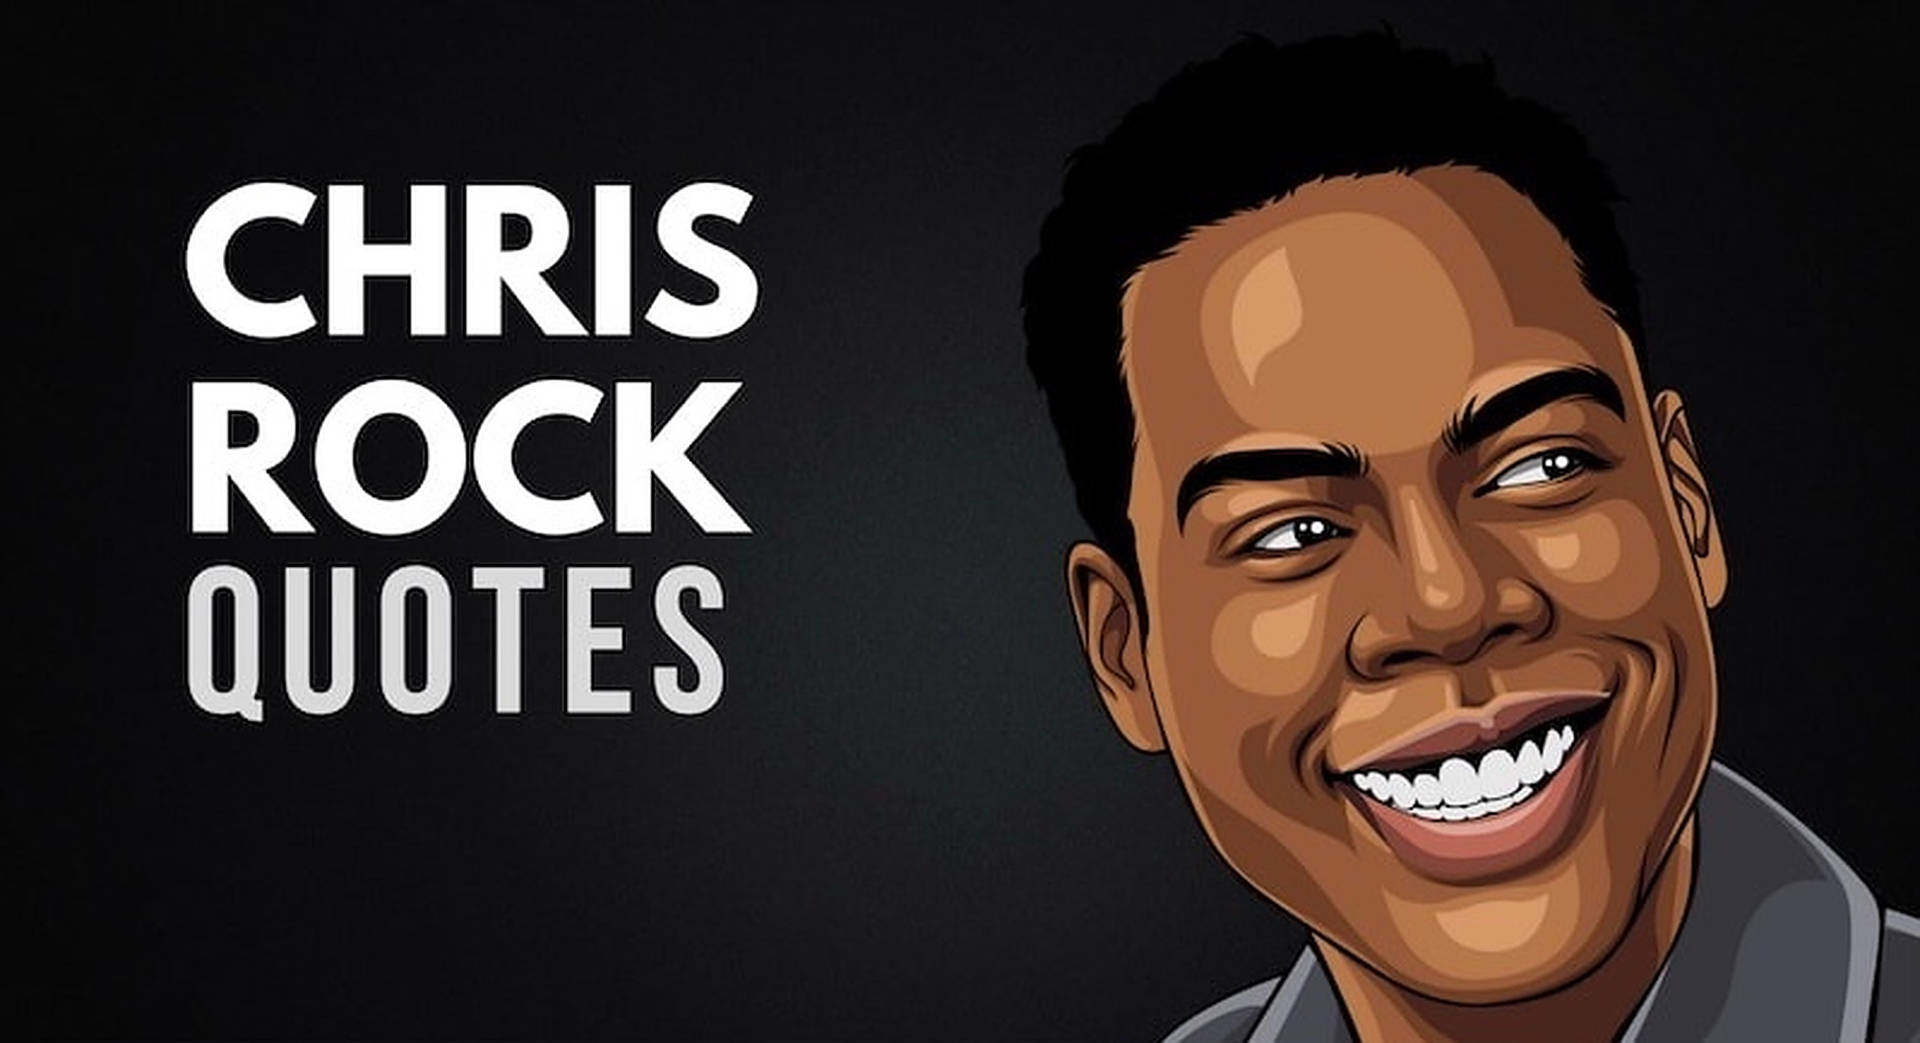 Chris Rock Quotes Digital Art Background